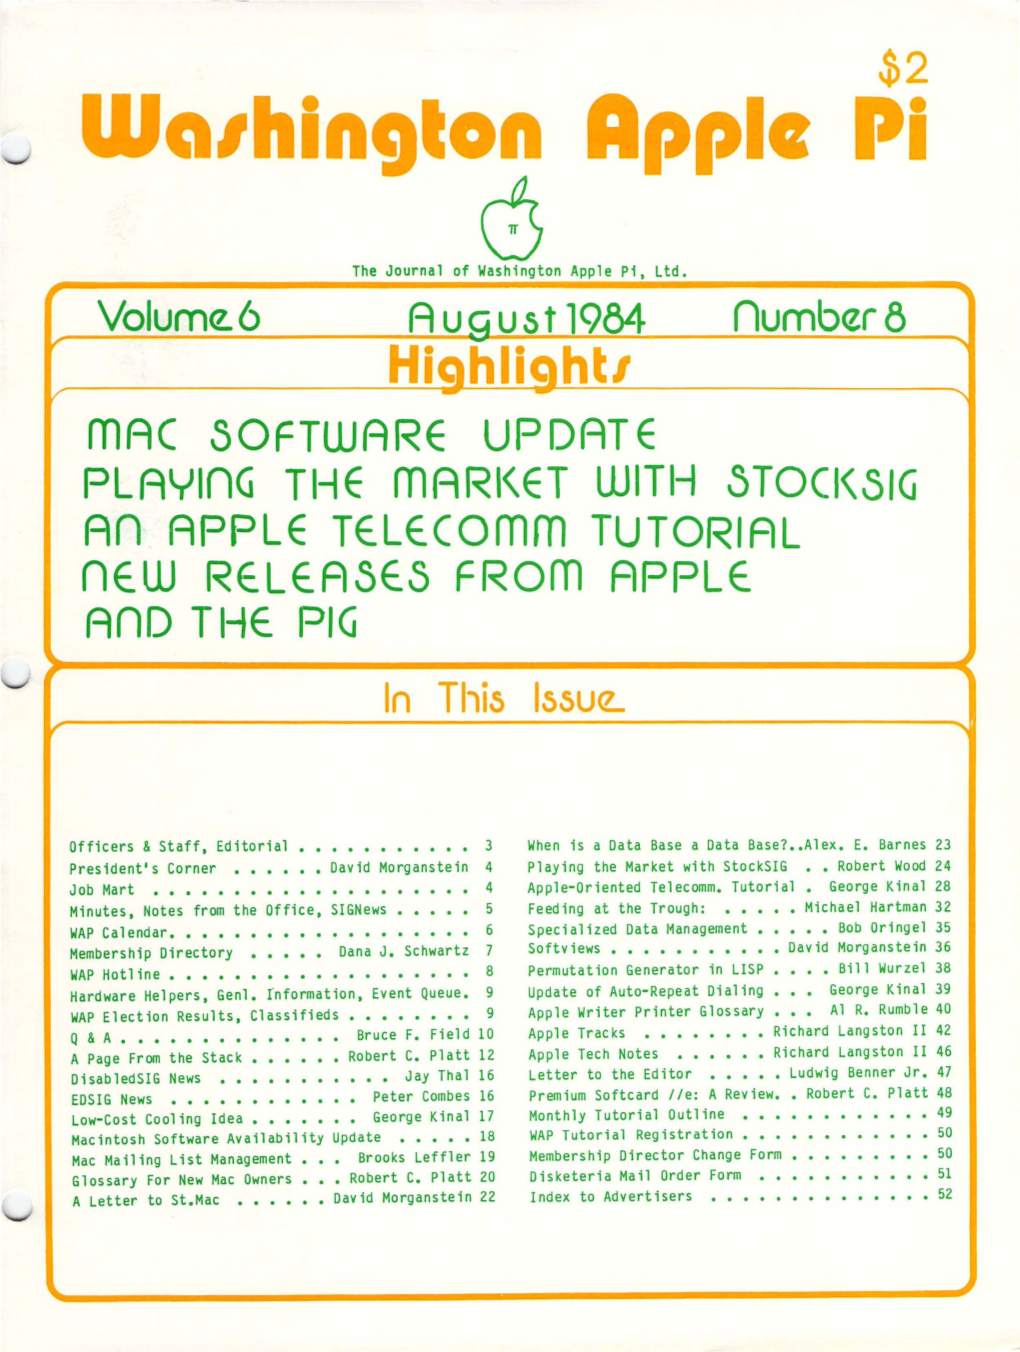 Washington Apple Pi Journal, August 1984